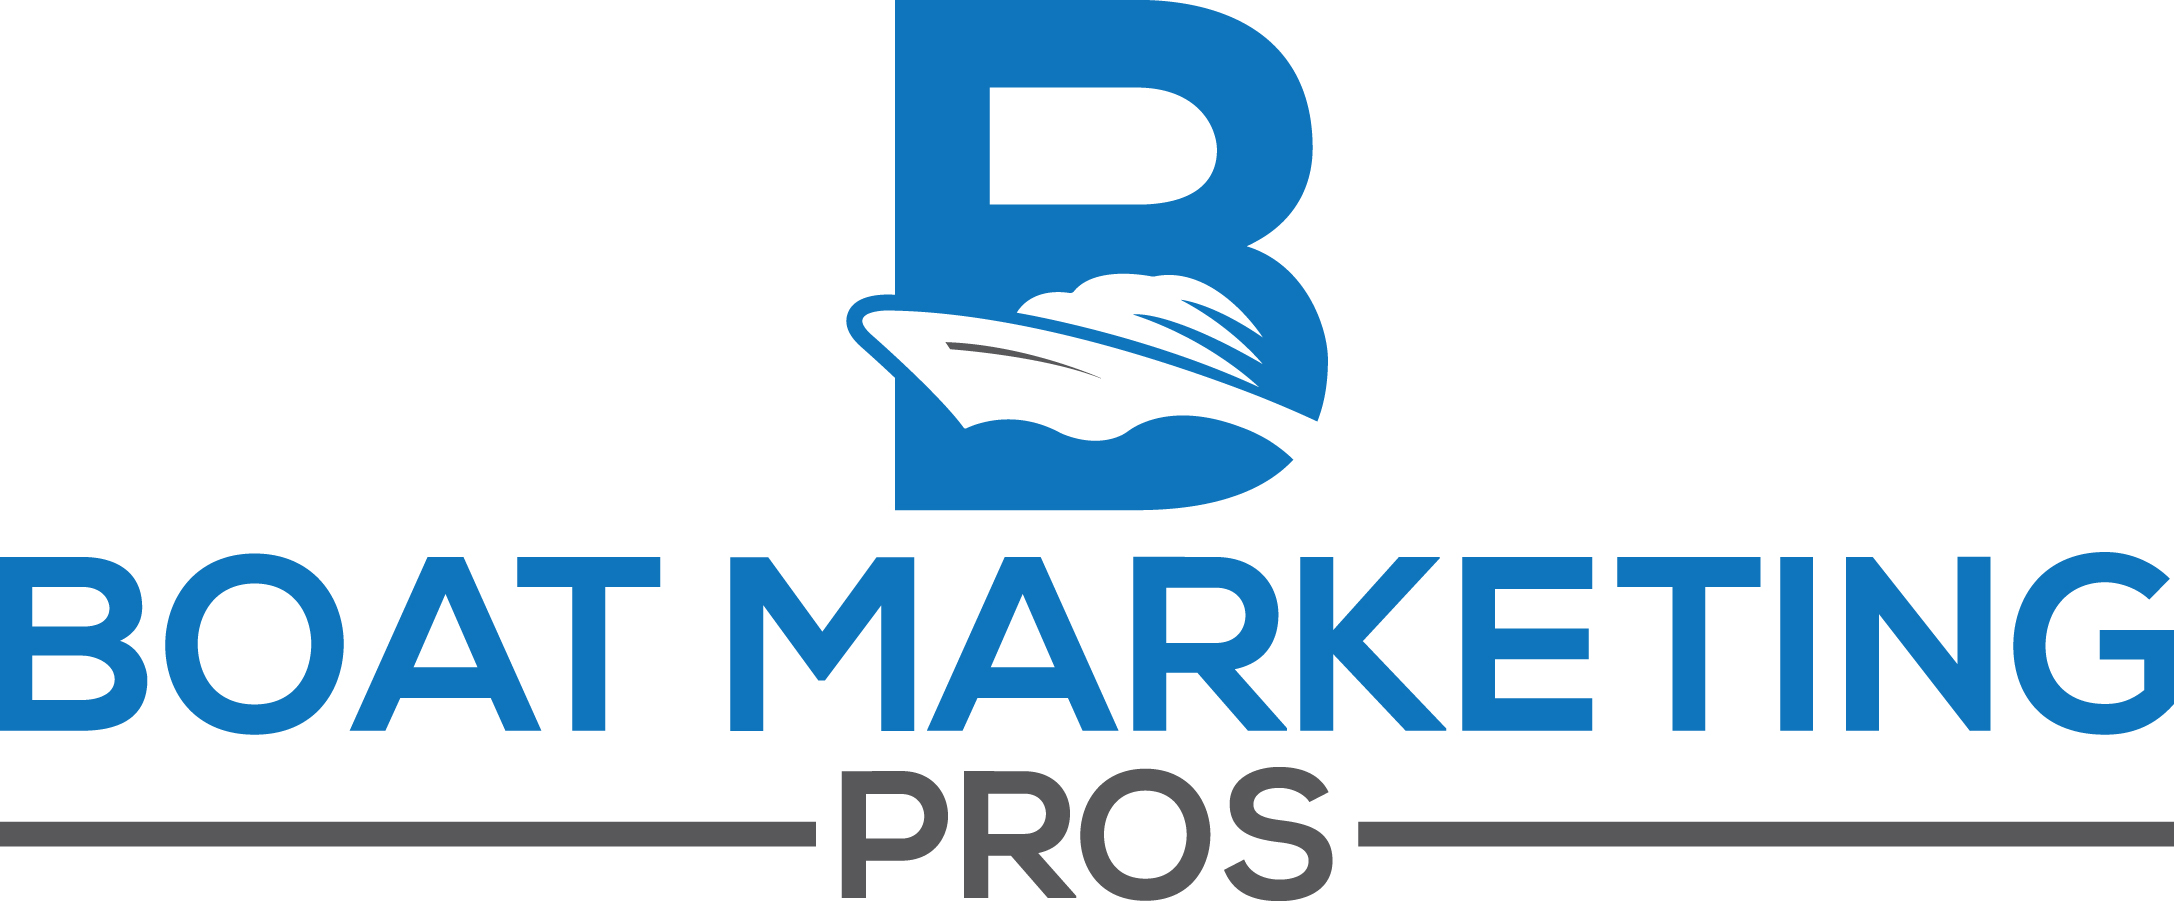 Boat Marketing Pros Logo